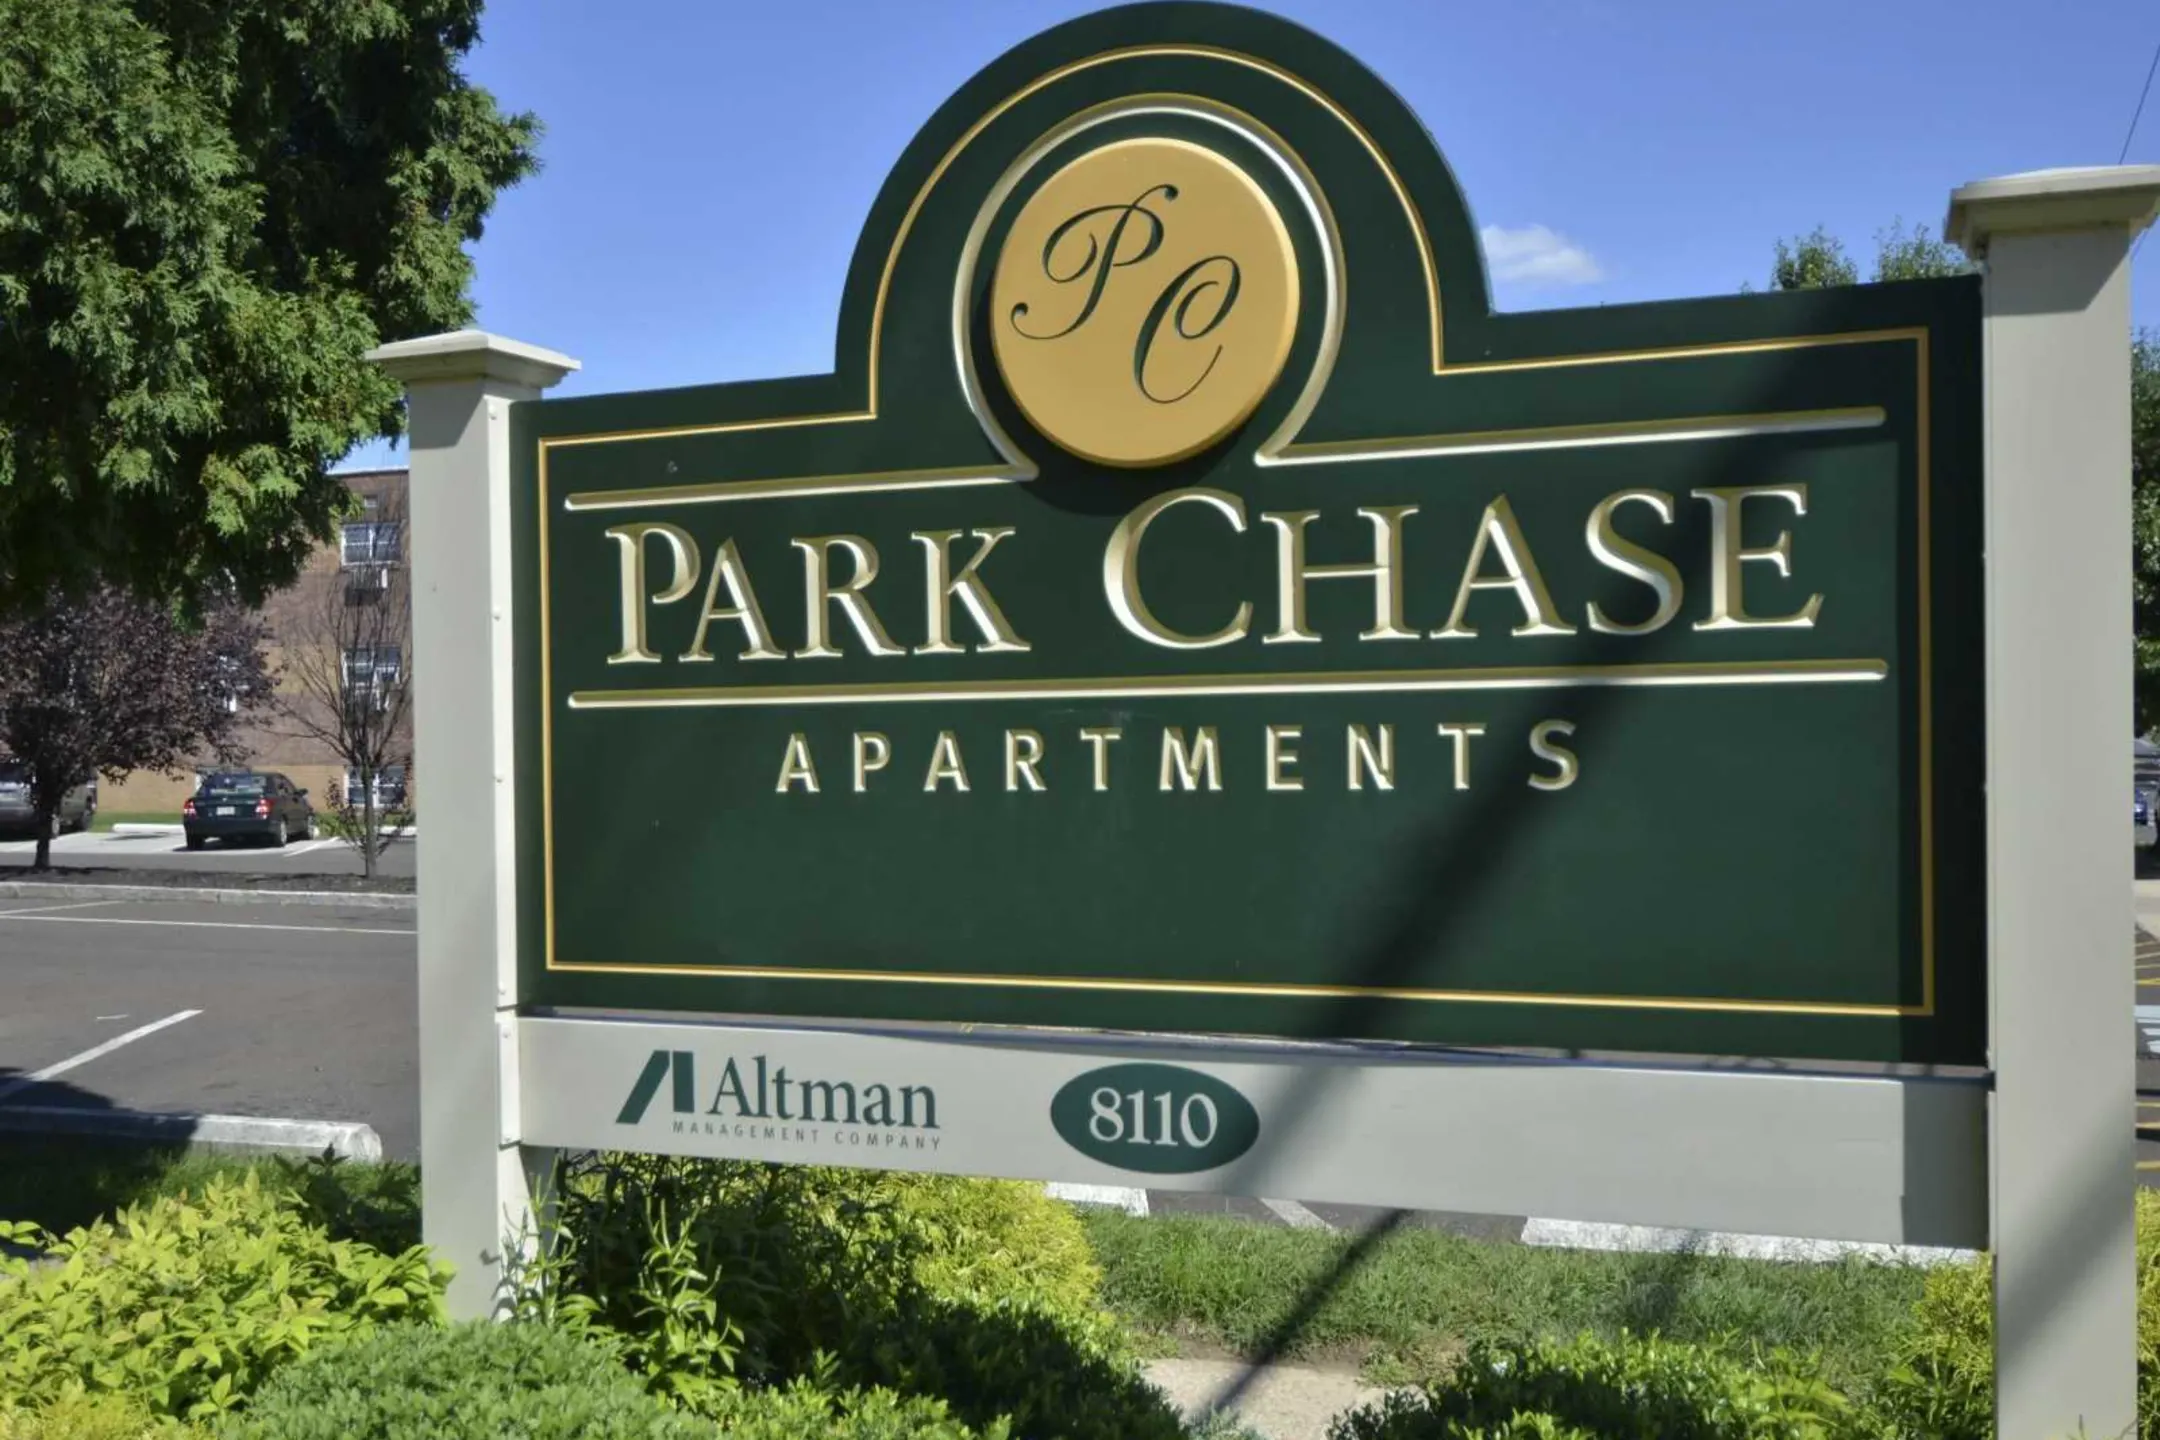 Building - Park Chase - Philadelphia, PA